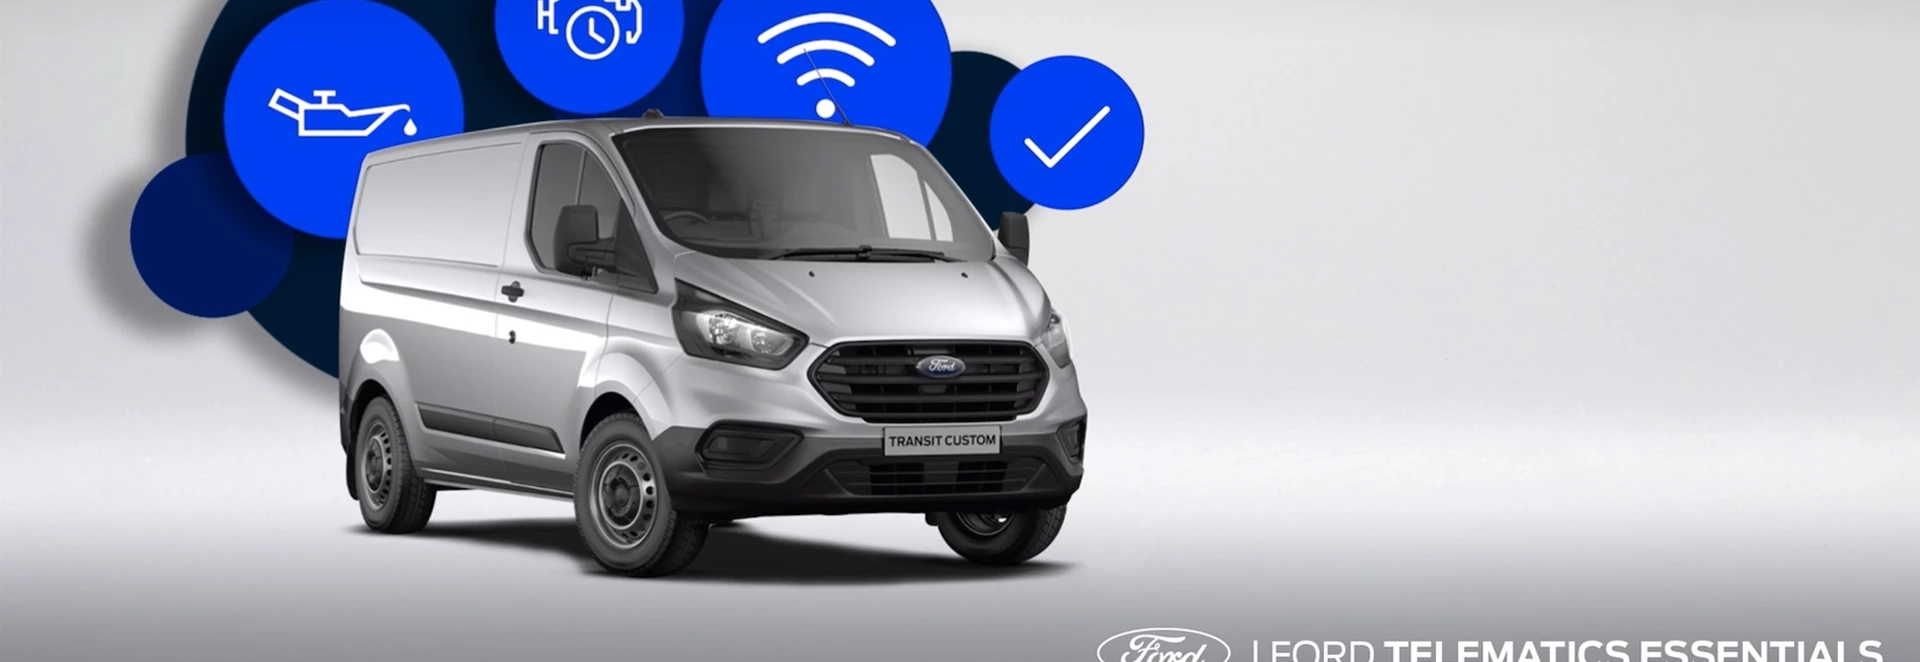 Ford Telematics Essentials system helps to boost van fleet productivity 